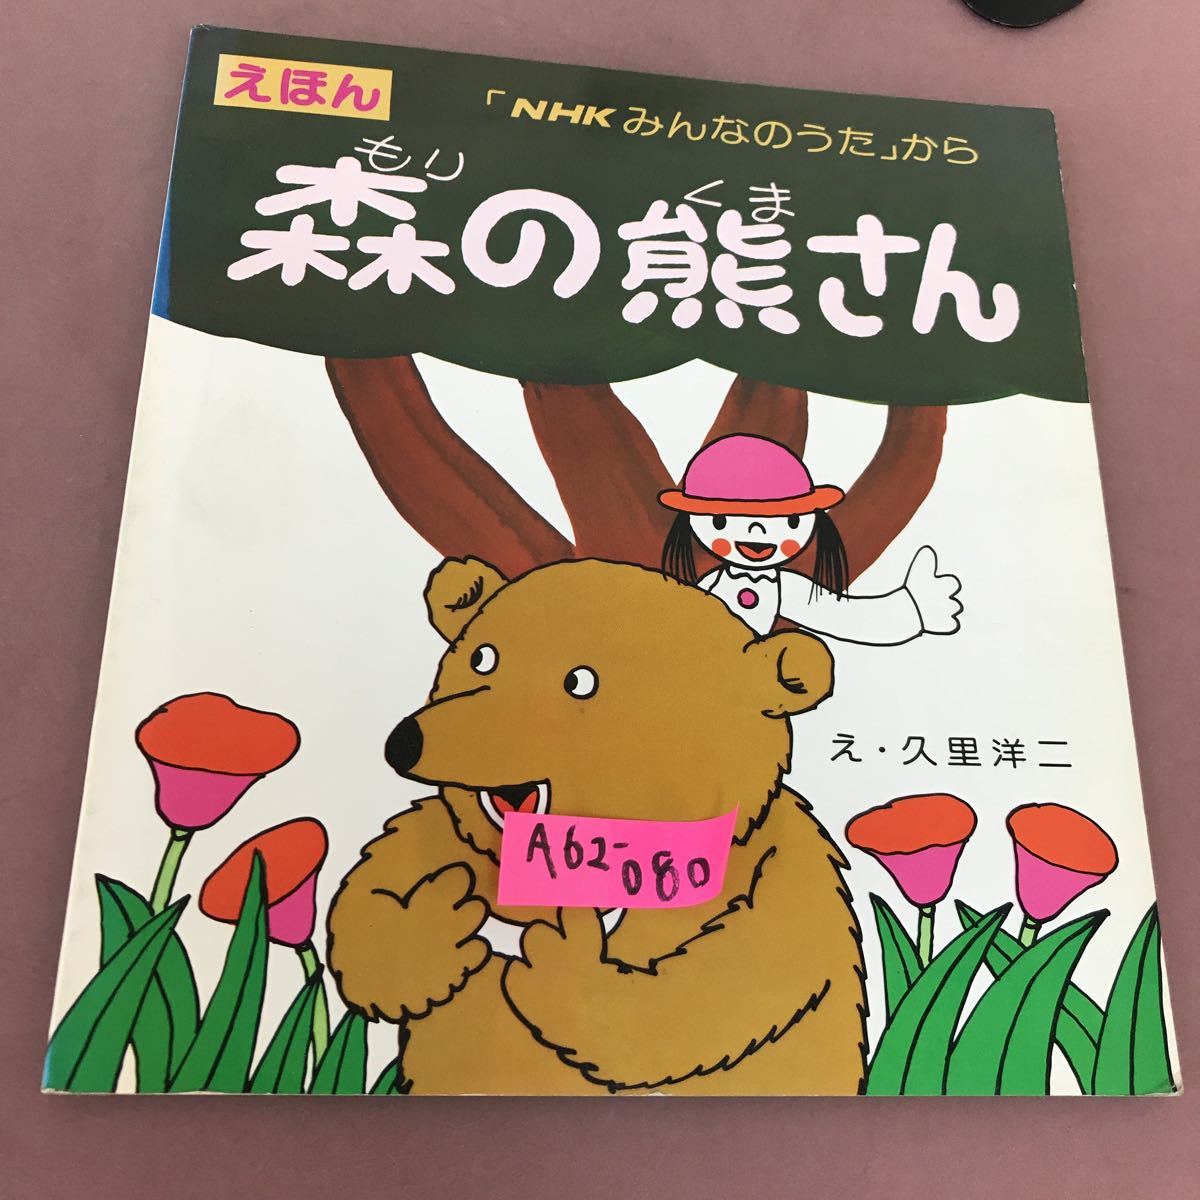 在庫有】 A62-080 森の熊さん 日本放送出版協会 絵本一般 - cavalarc.com